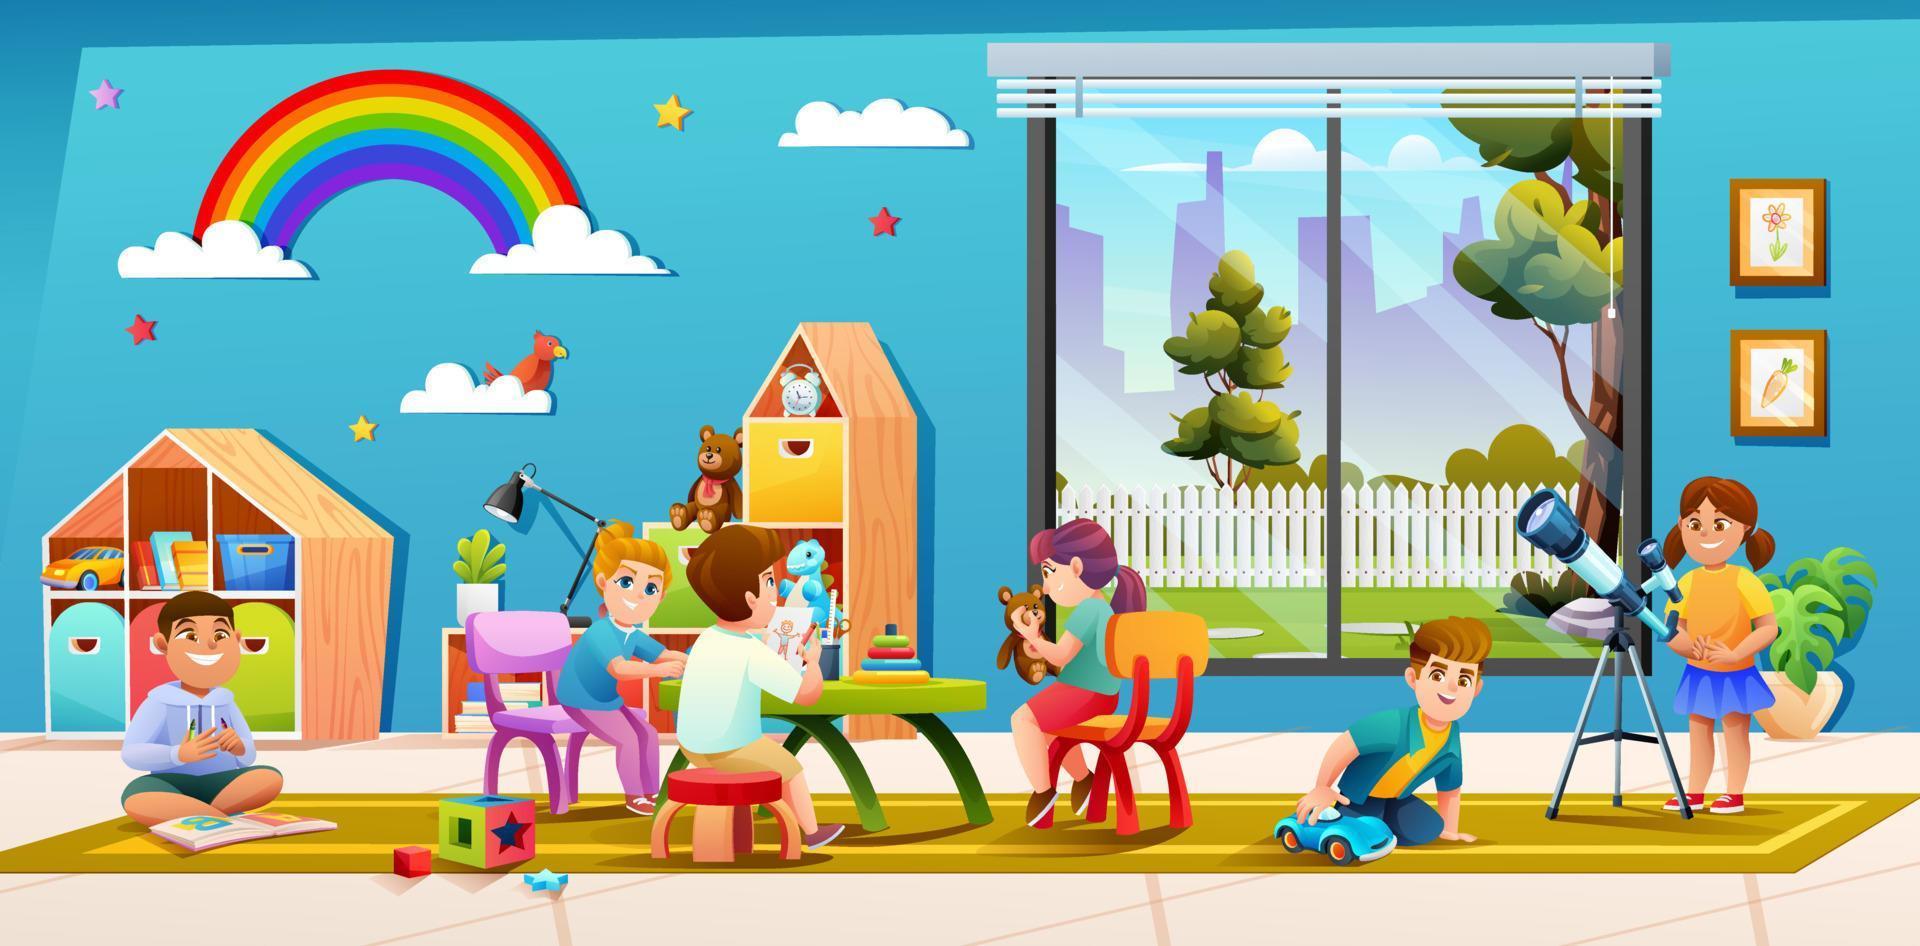 Cheerful children playing together in kindergarten classroom cartoon illustration vector